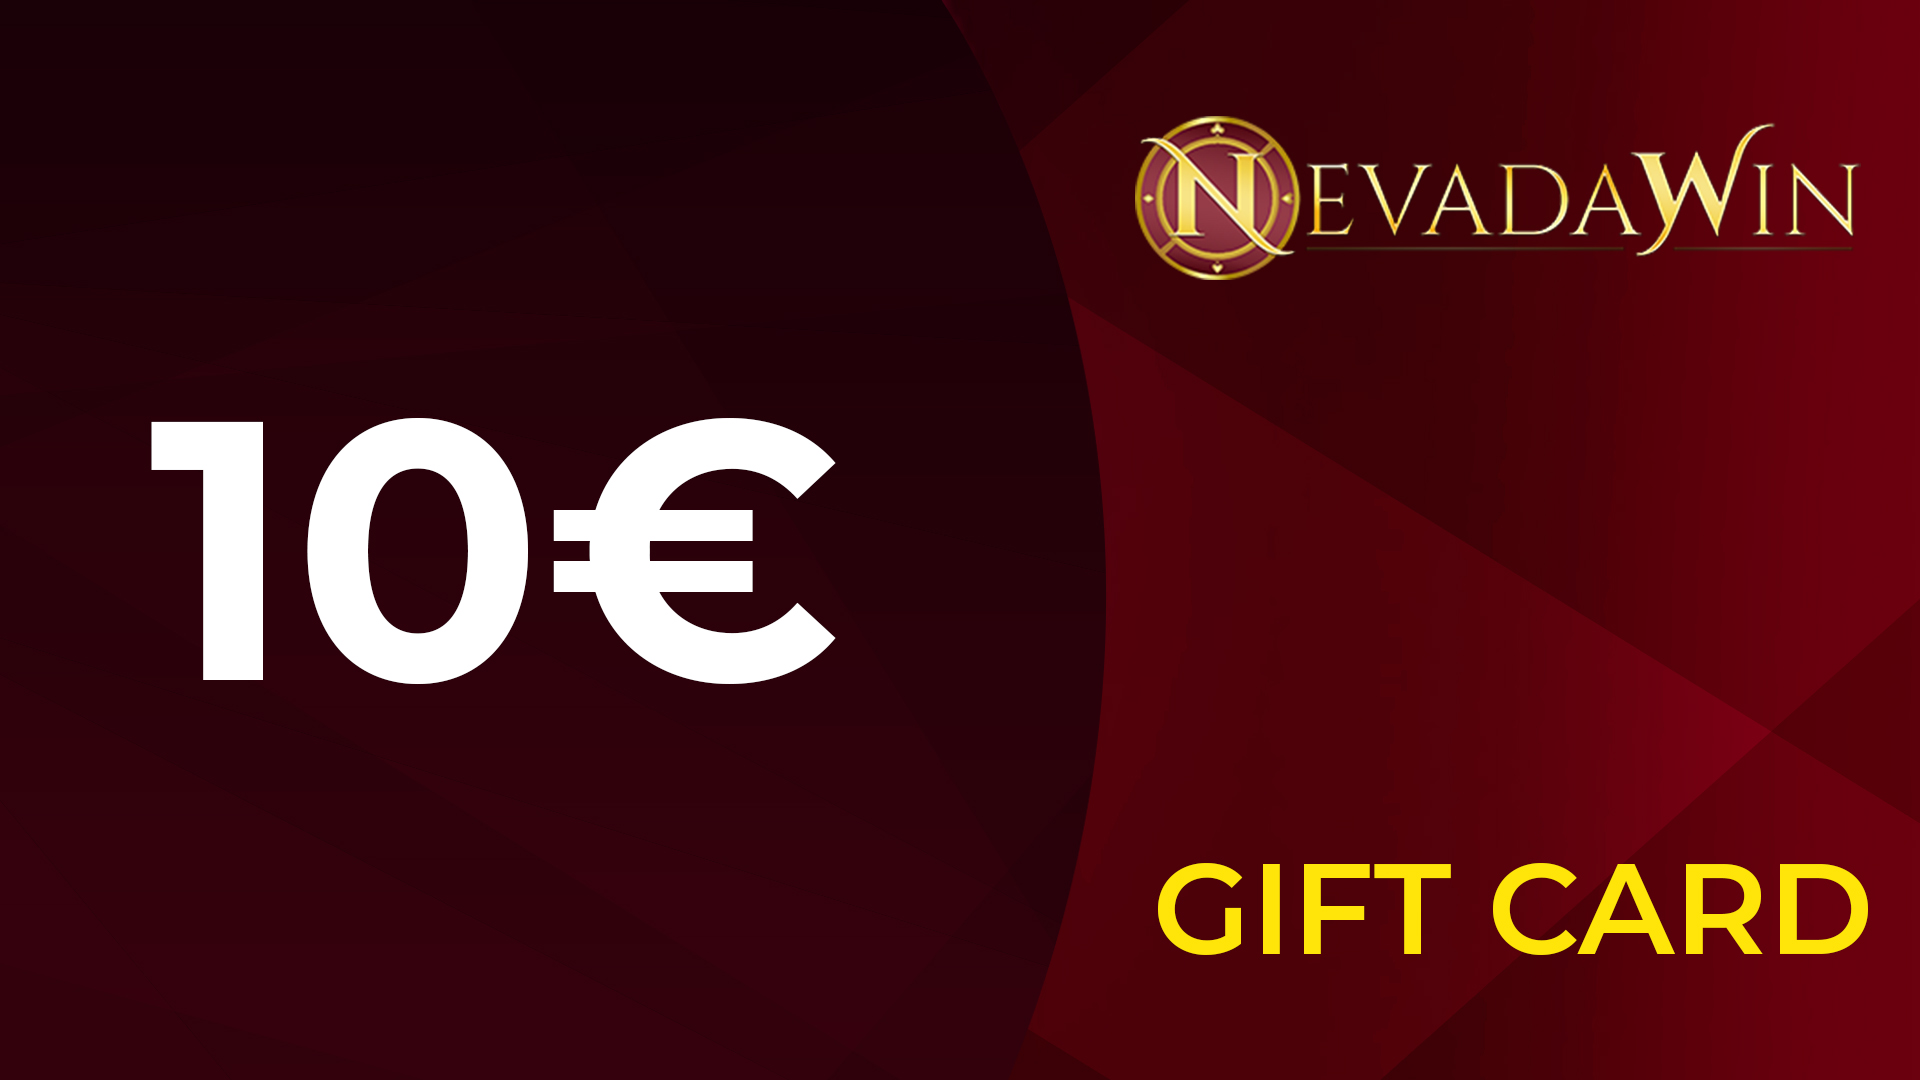 NevadaWin €10 Giftcard